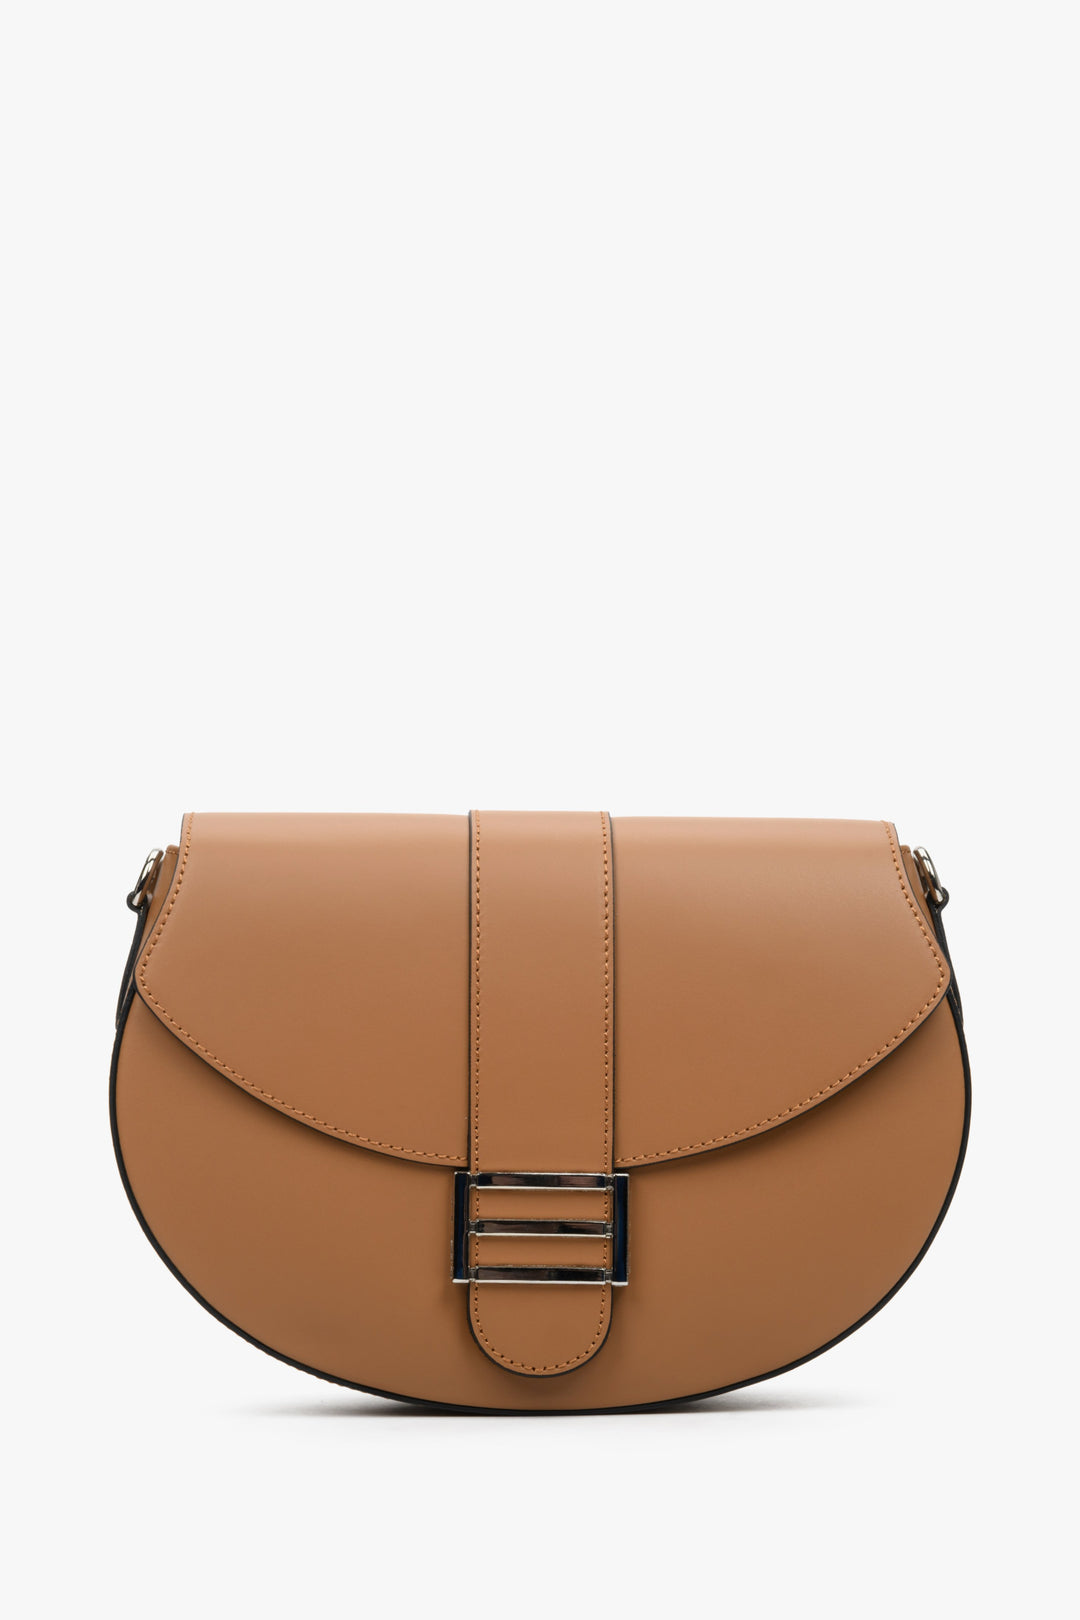 Leather, women's brown horseshoe-shaped handbag by Estro.